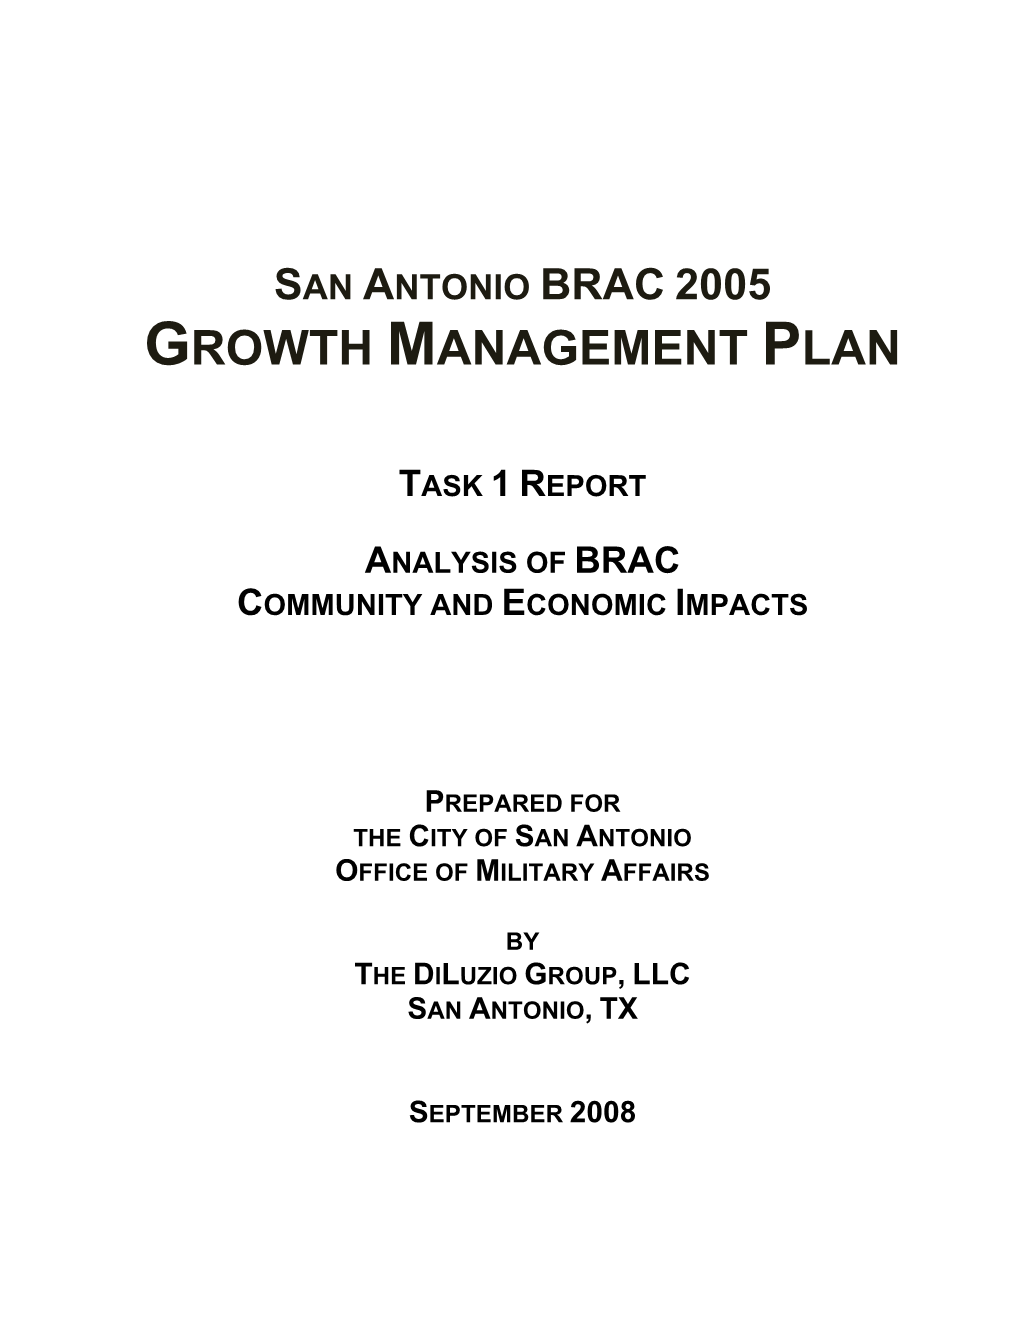 Analysis of Brac Community and Economic Impacts